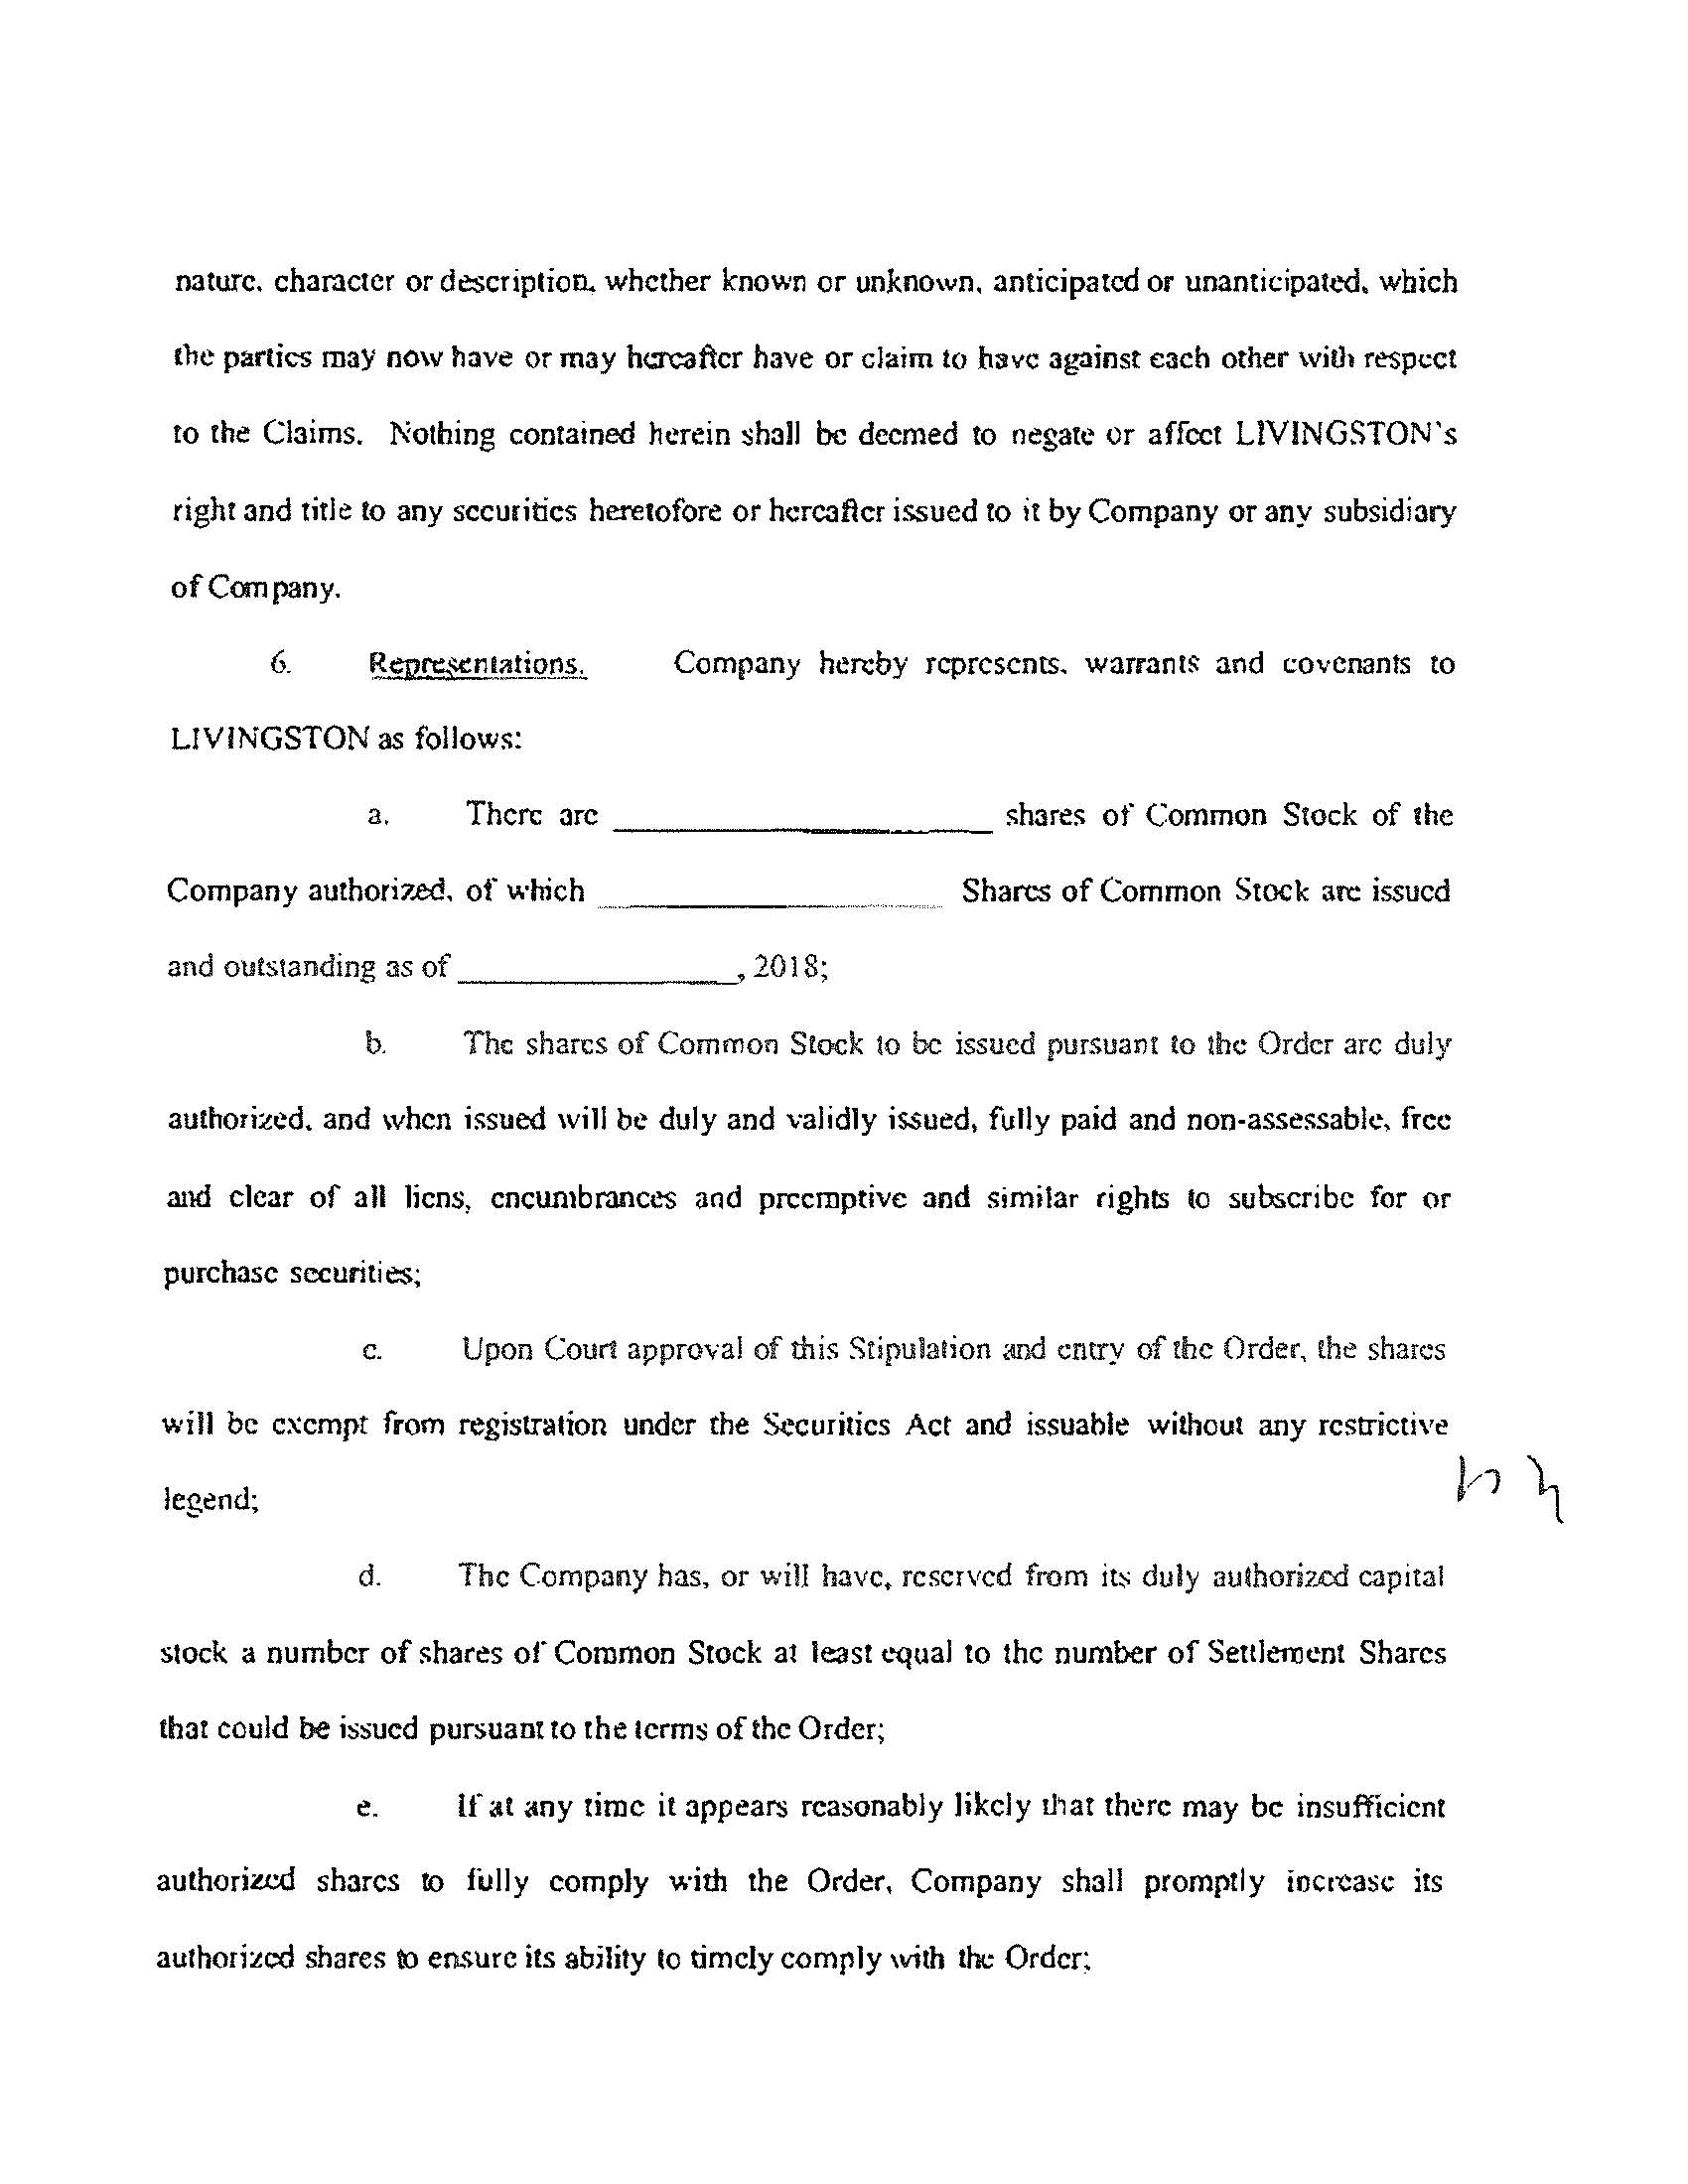 Settlement Agreement_Page_06.jpg